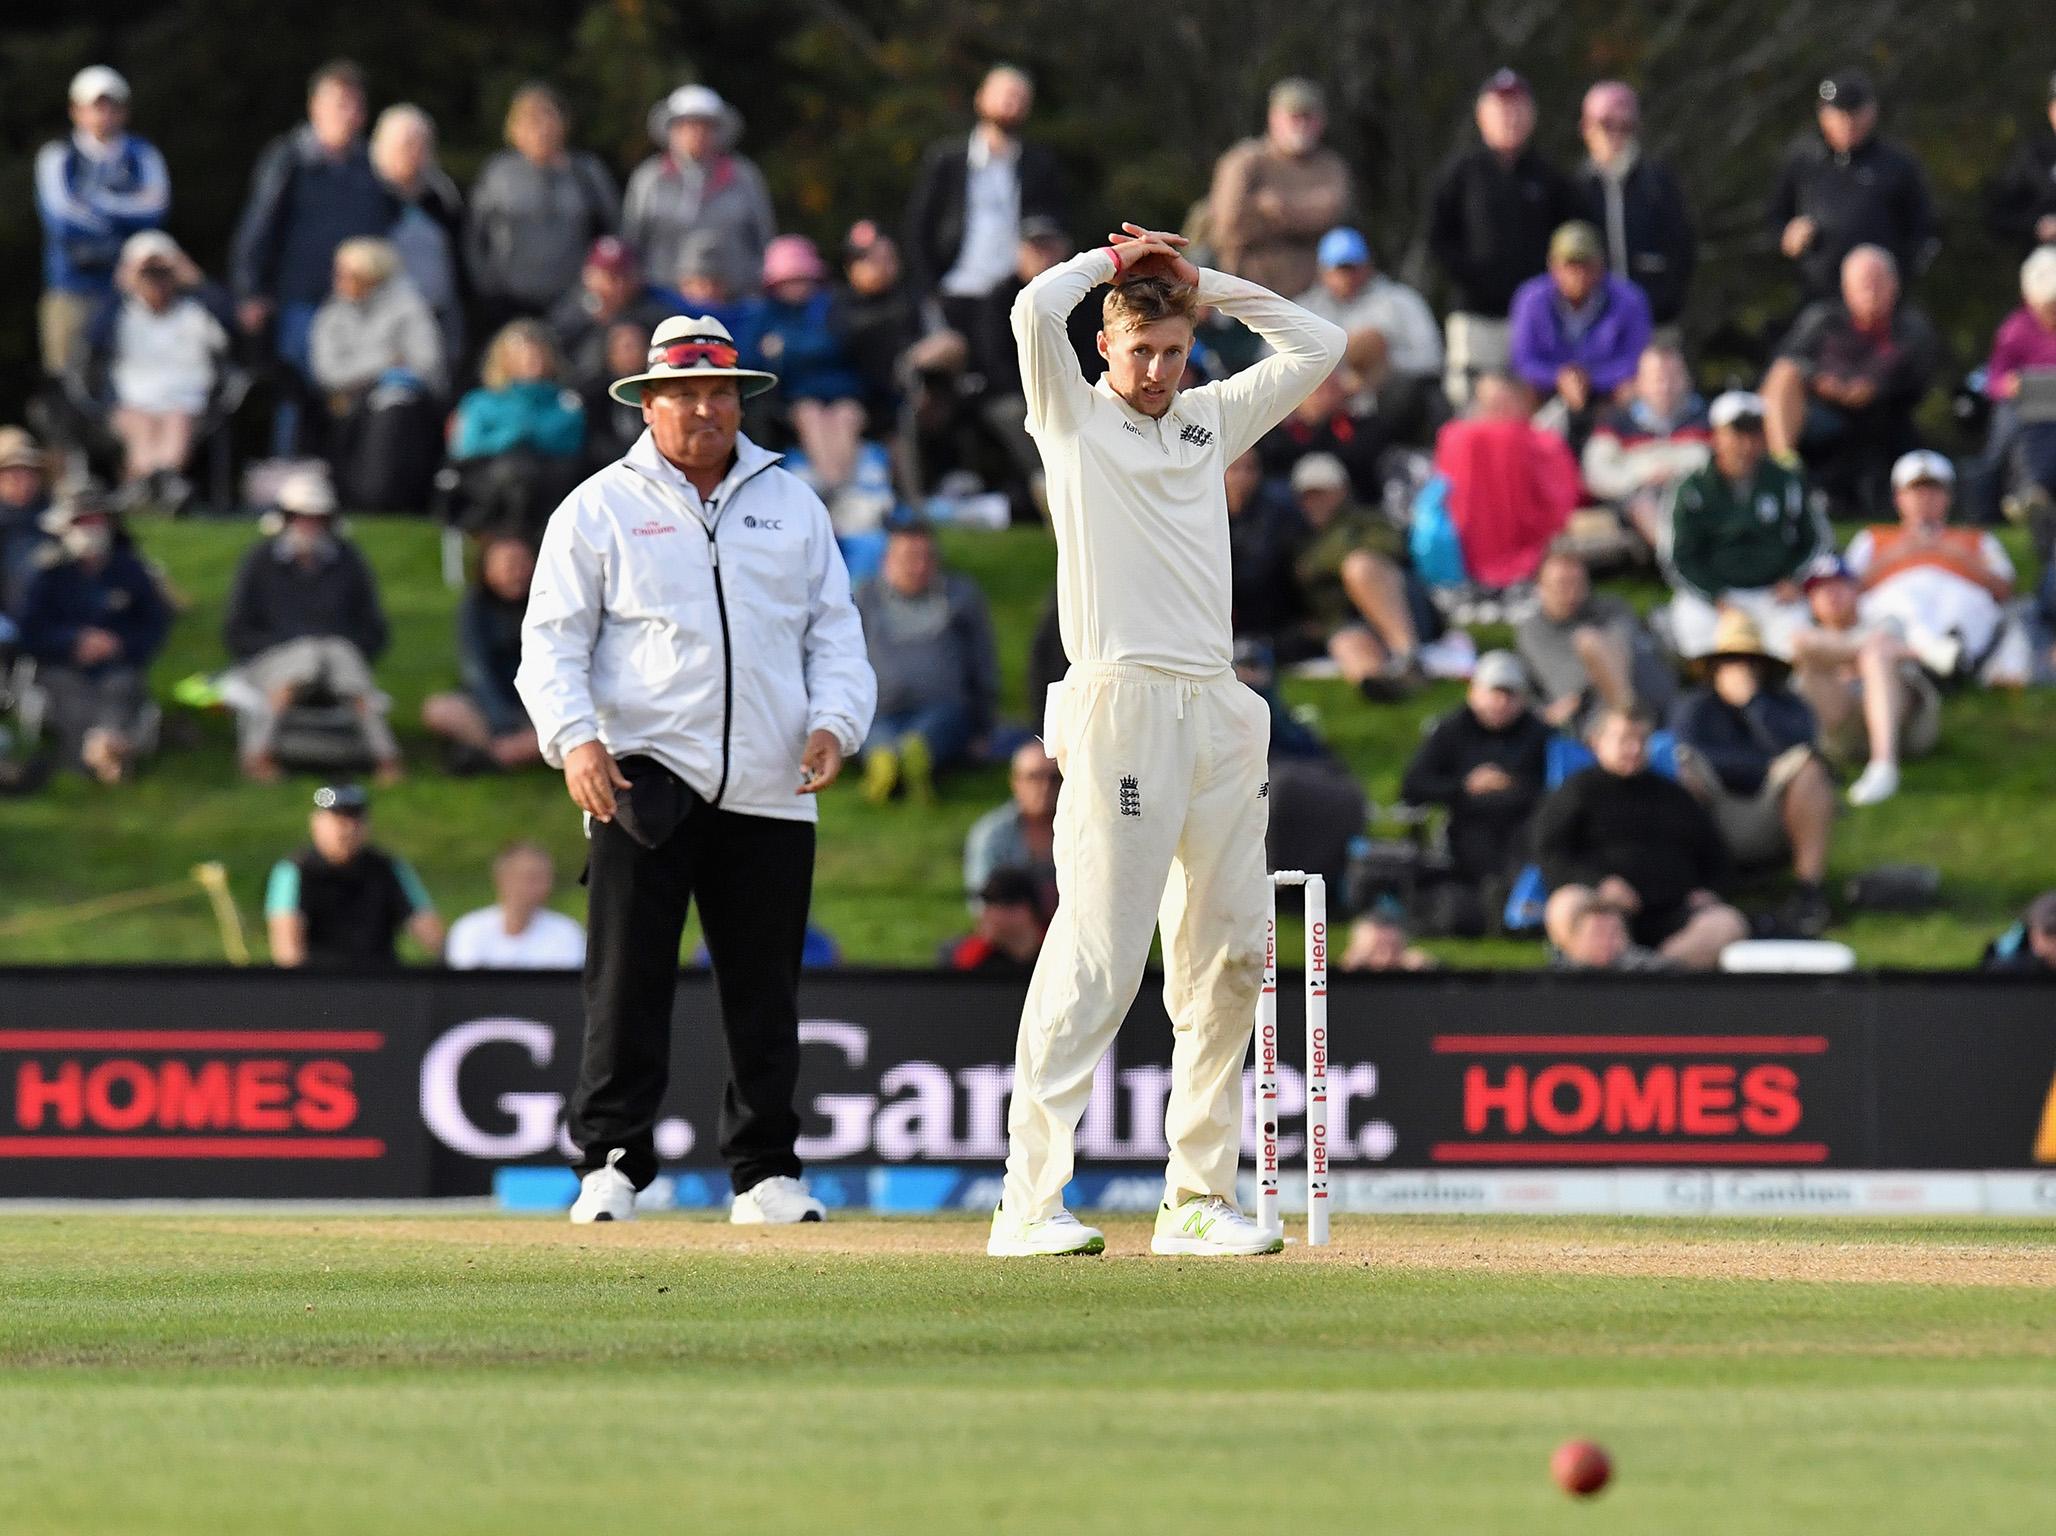 Joe Root endured a tough Test series in New Zealand